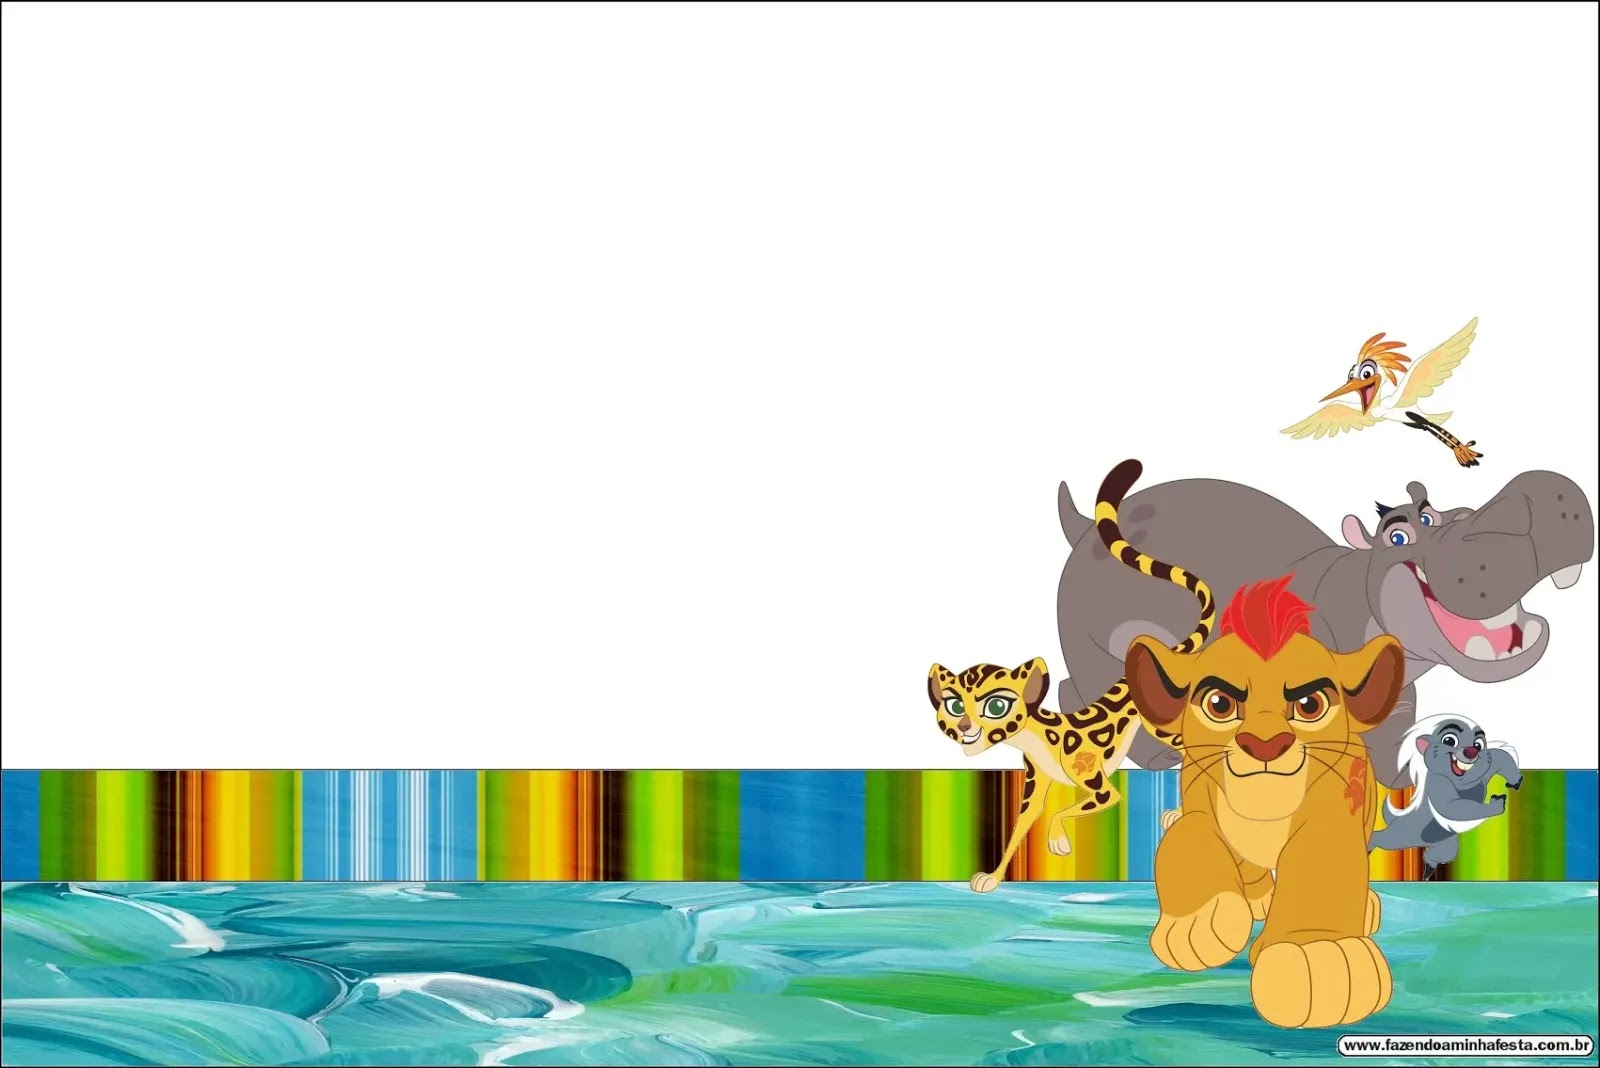 free-printable-lion-king-birthday-party-kits-template-free-printable